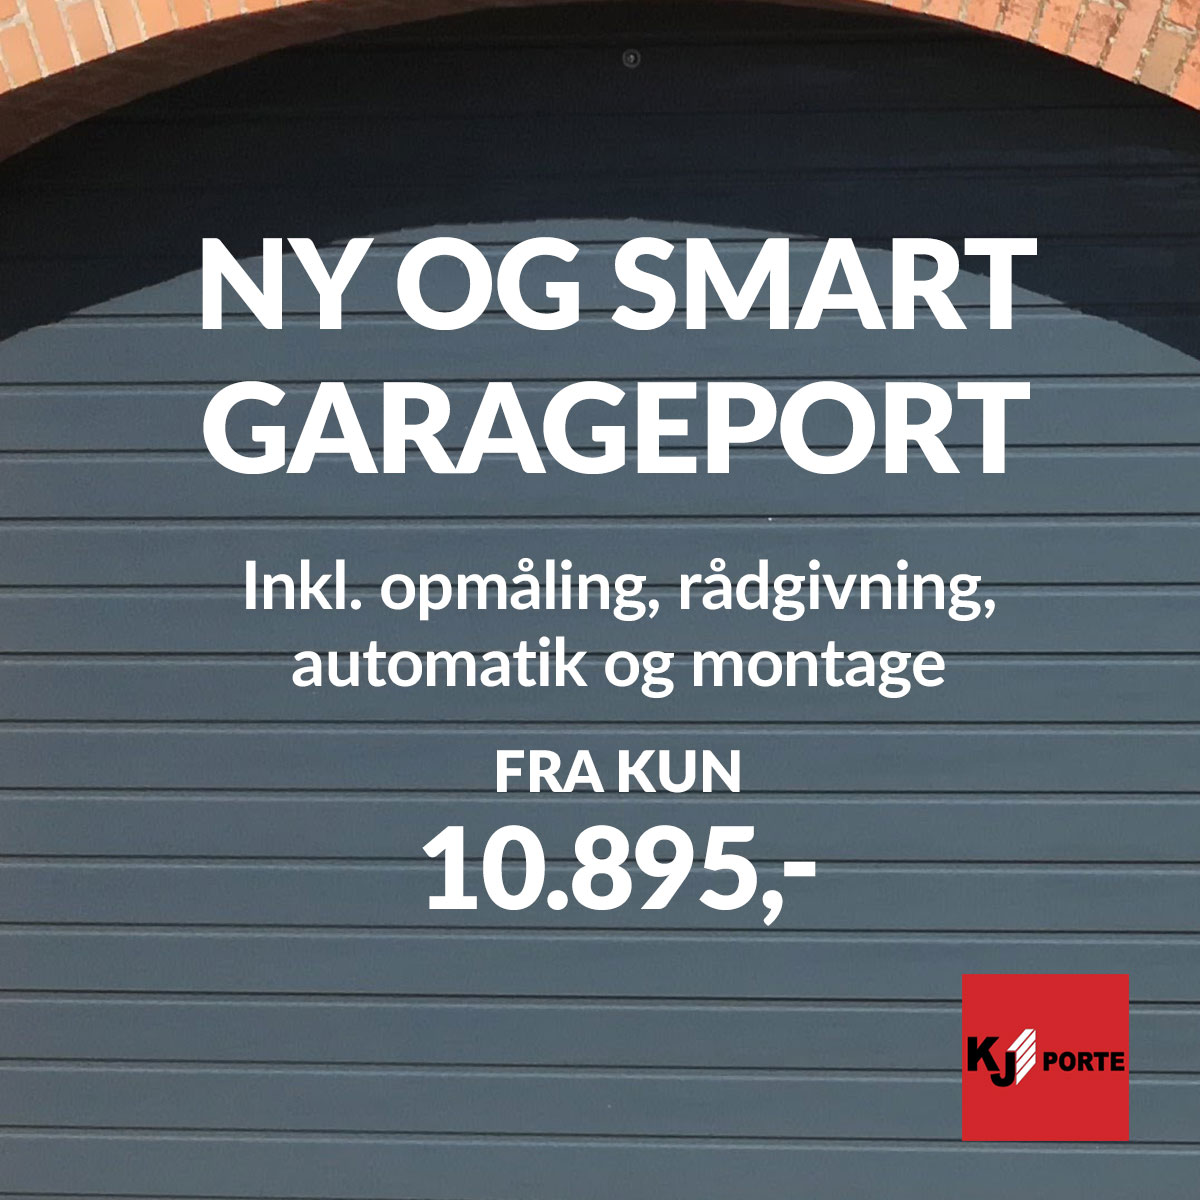 Ny-og-smart-garageport-til-10.895,-.-Buet-ledhejseport-fra-KJ-Porte